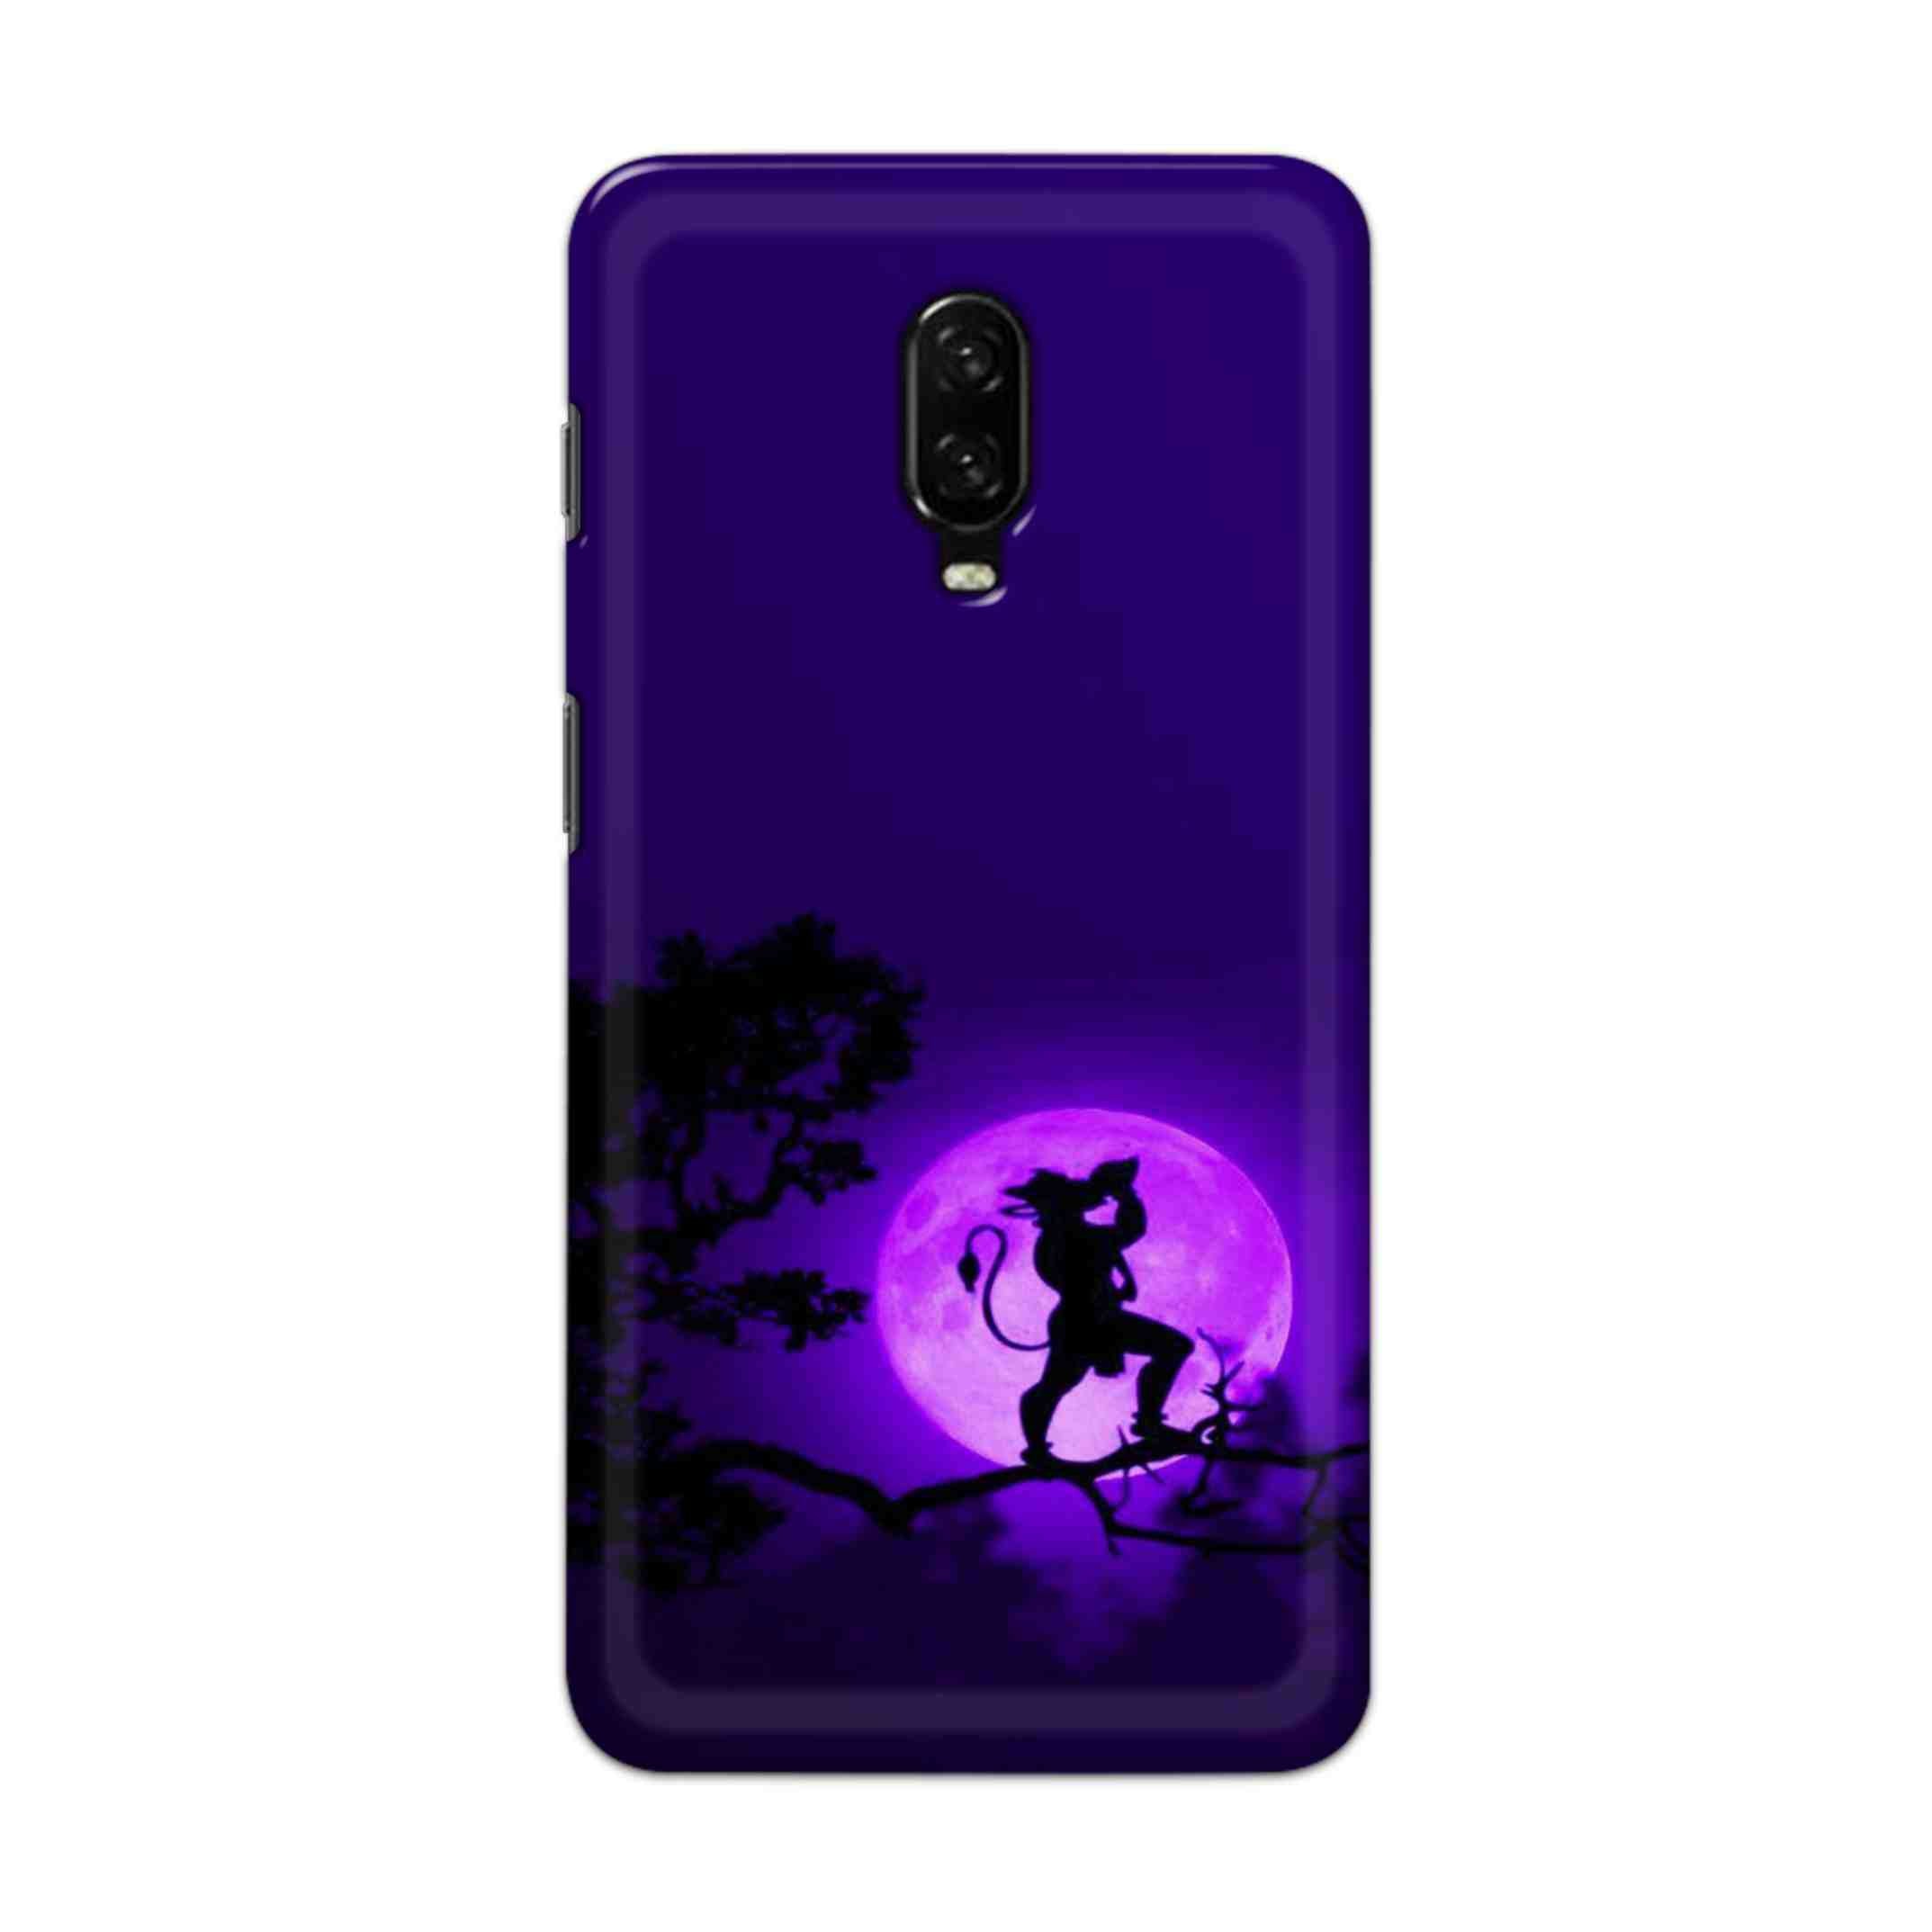 Buy Hanuman Hard Back Mobile Phone Case Cover For OnePlus 6T Online